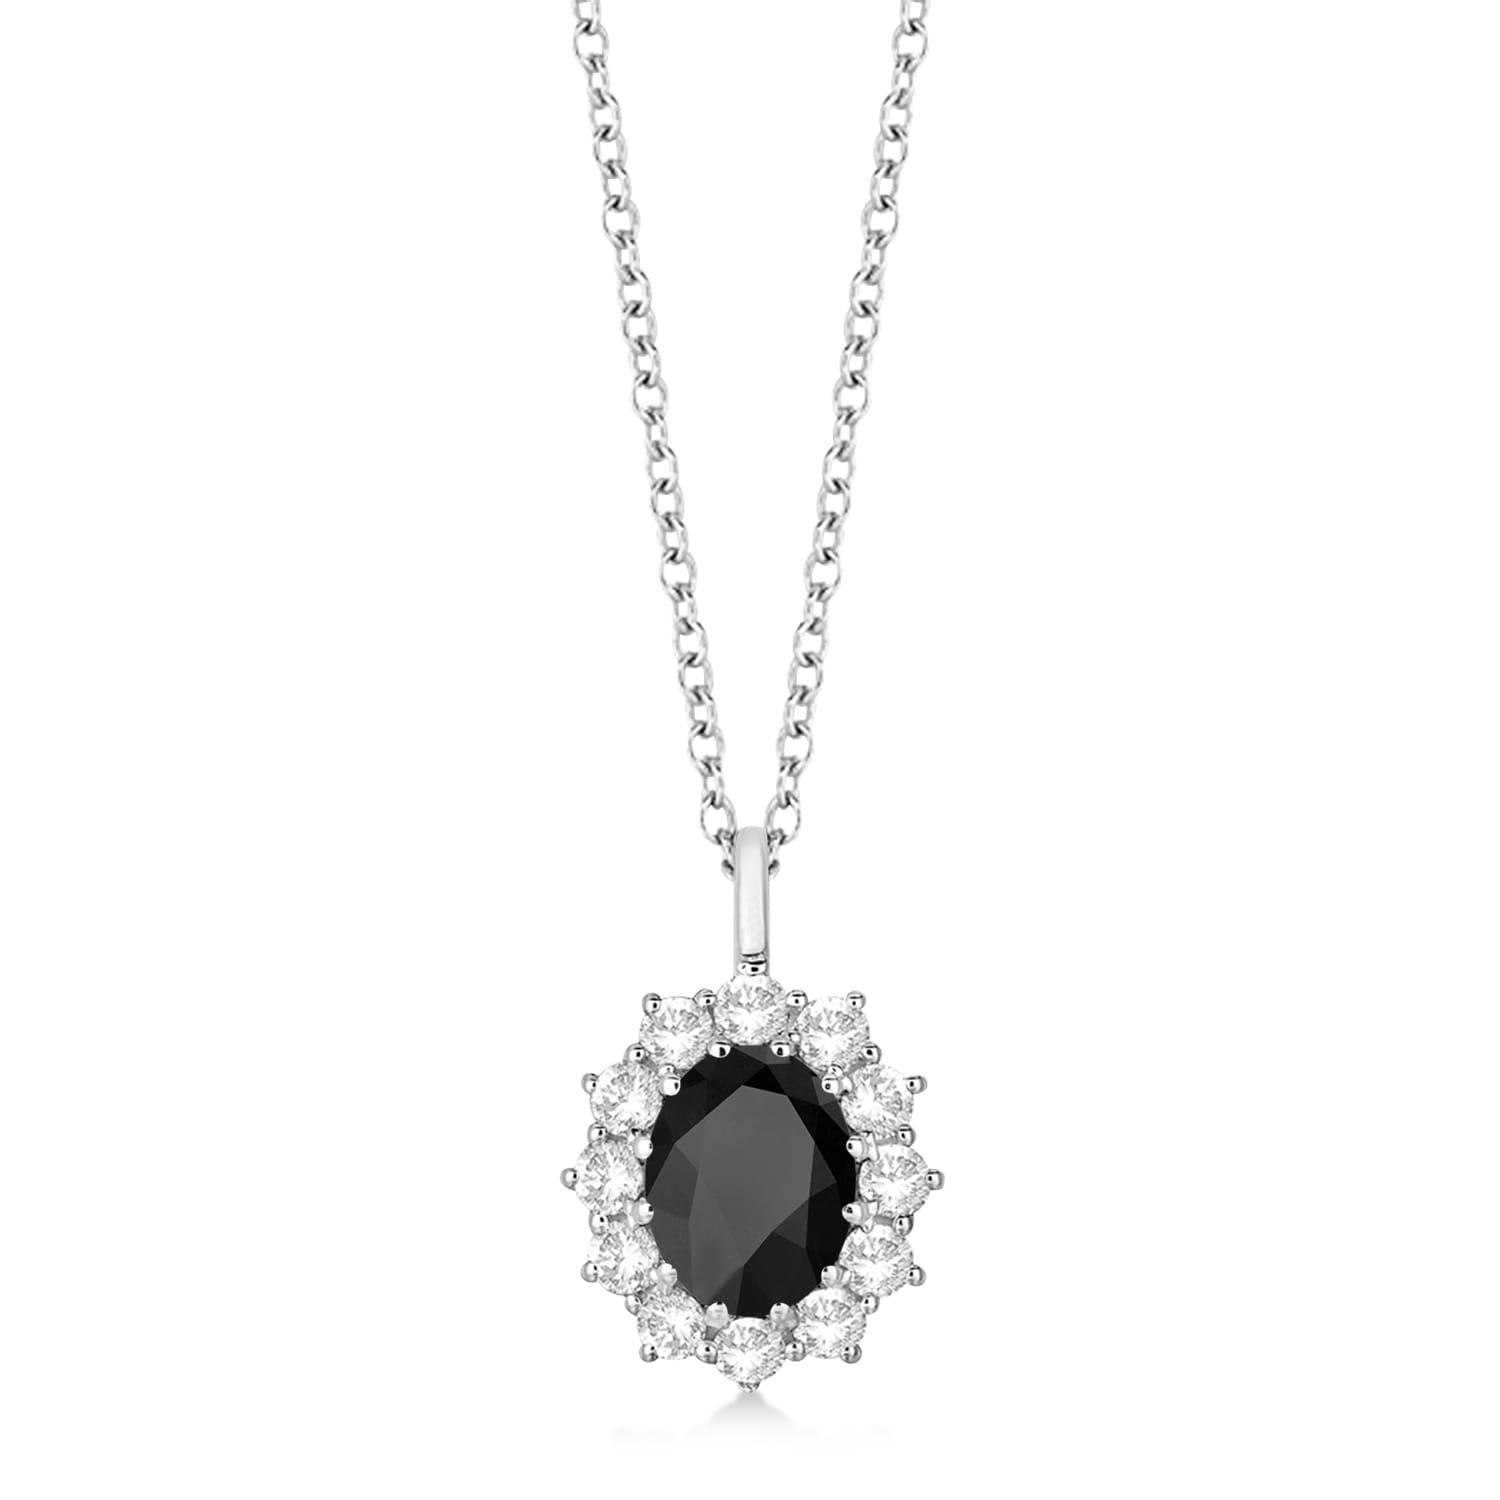 Oval Onyx and Diamond Pendant Necklace 14k White Gold 3.60ctw - AZ9787